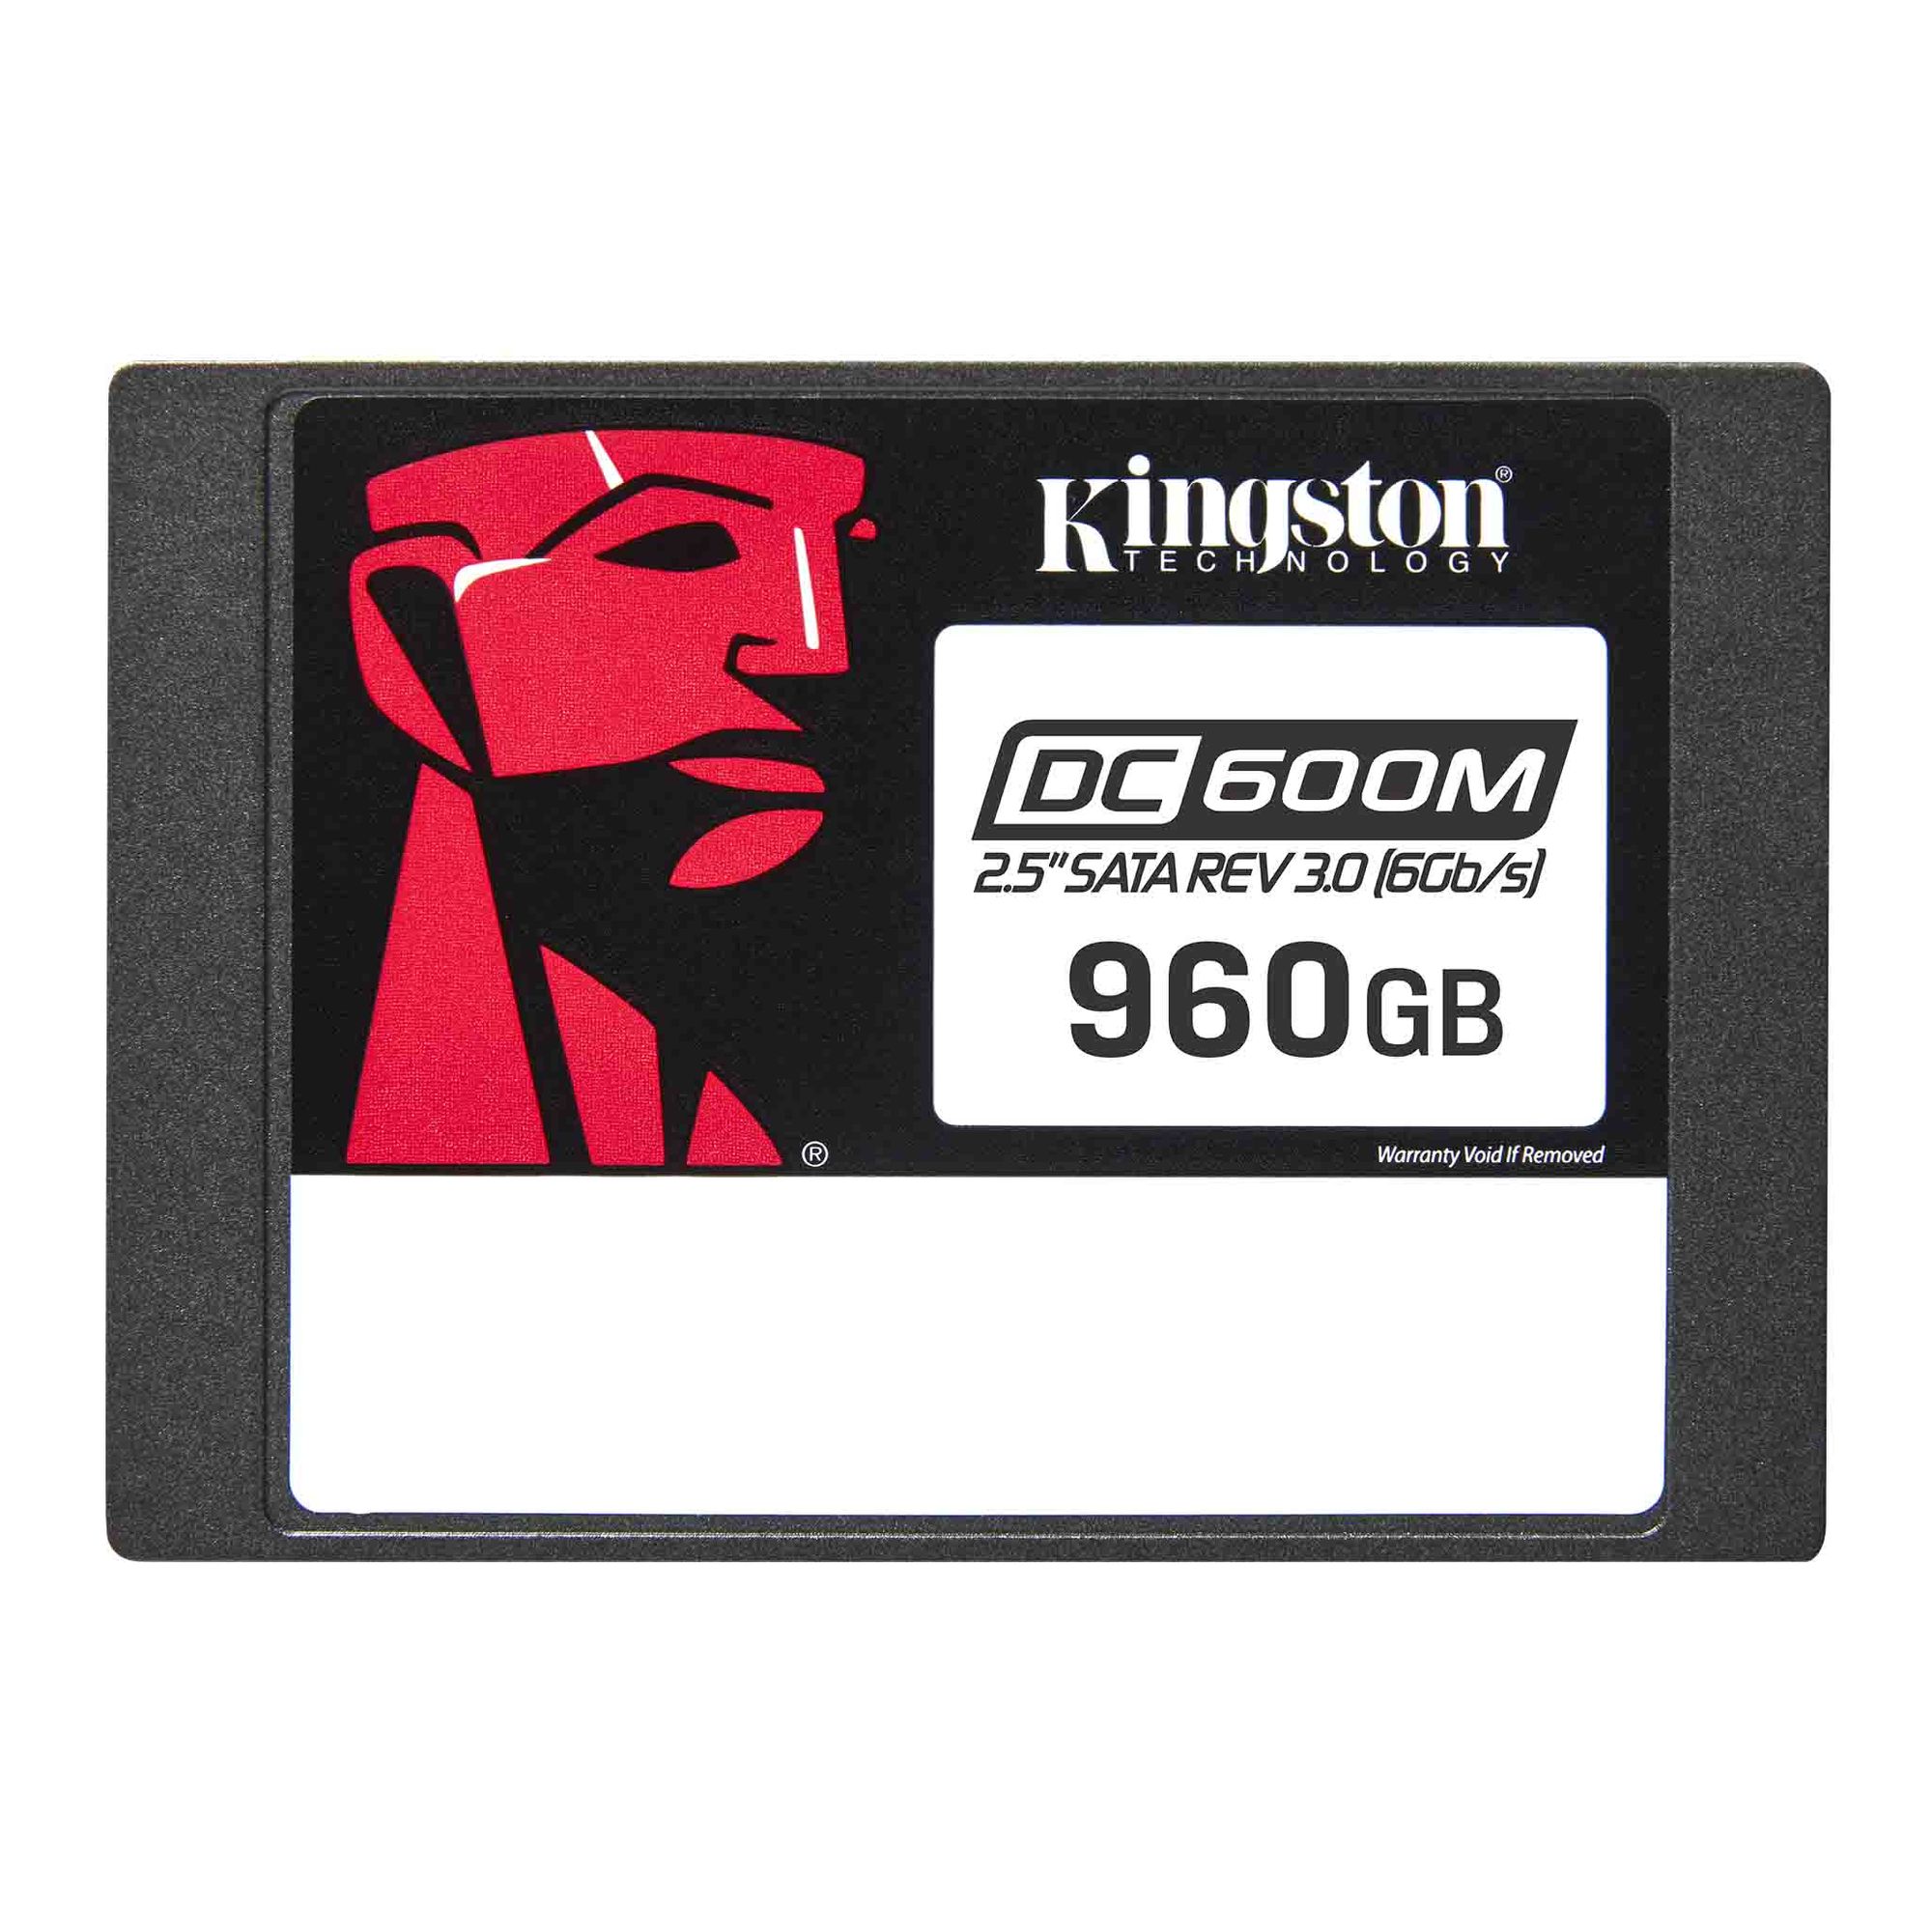 Накопитель SSD 2.5 Kingston Enterprise DC600M SATA 3 960GB (SEDC600M/960G) накопитель ssd 2 5 kingston enterprise dc600m sata 3 480gb sedc600m 480g